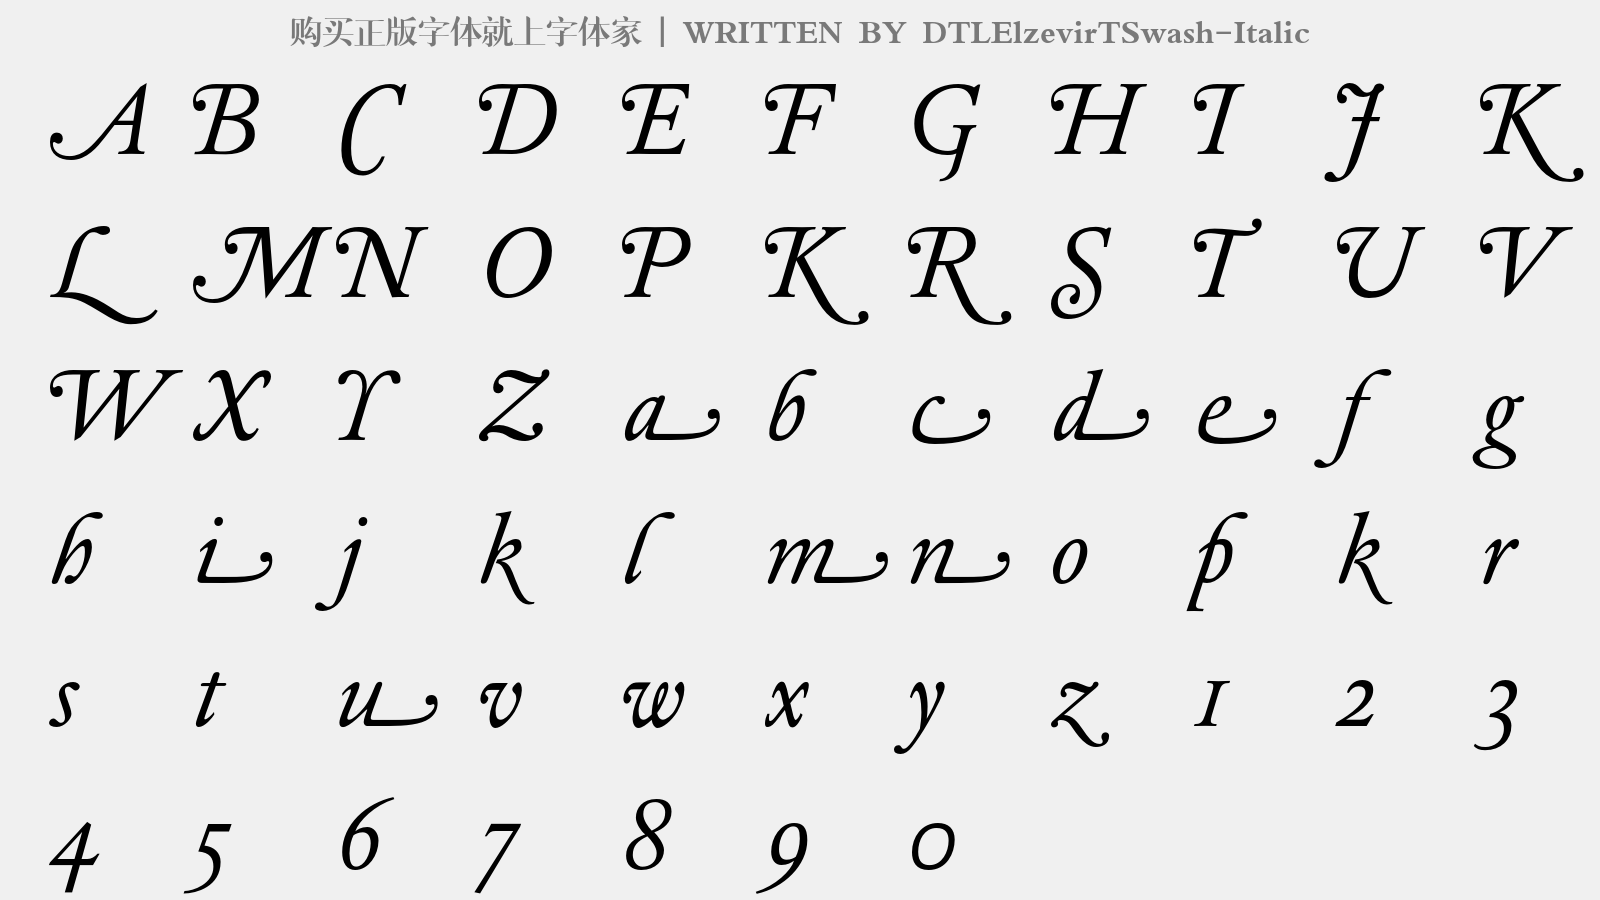 DTLElzevirTSwash-Italic - 大写字母/小写字母/数字